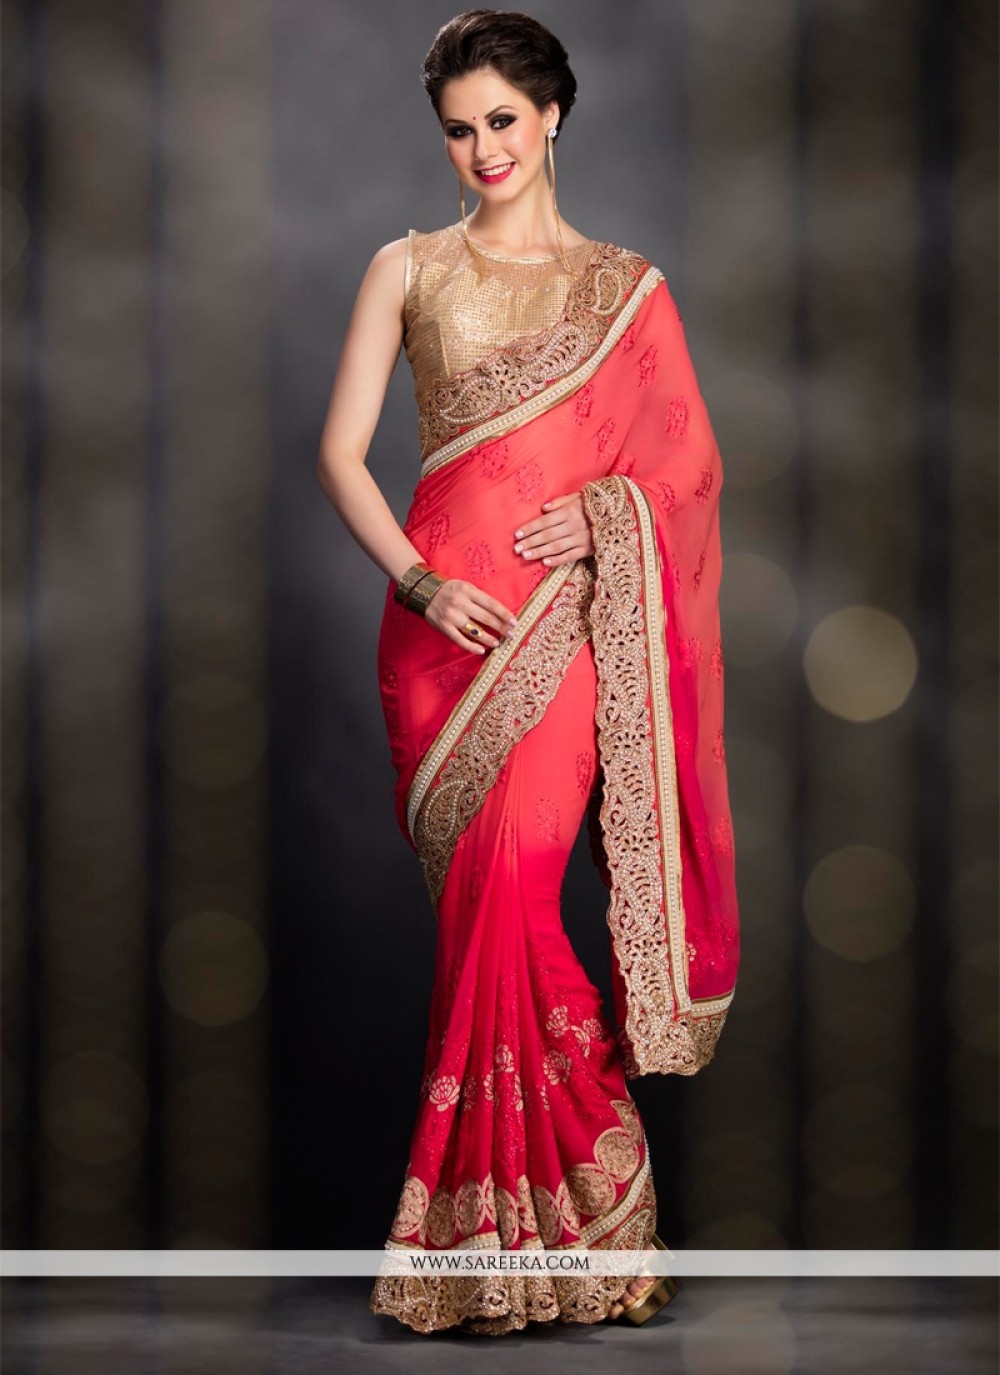 Jacquard Hot Pink and Red Designer Bridal Sarees